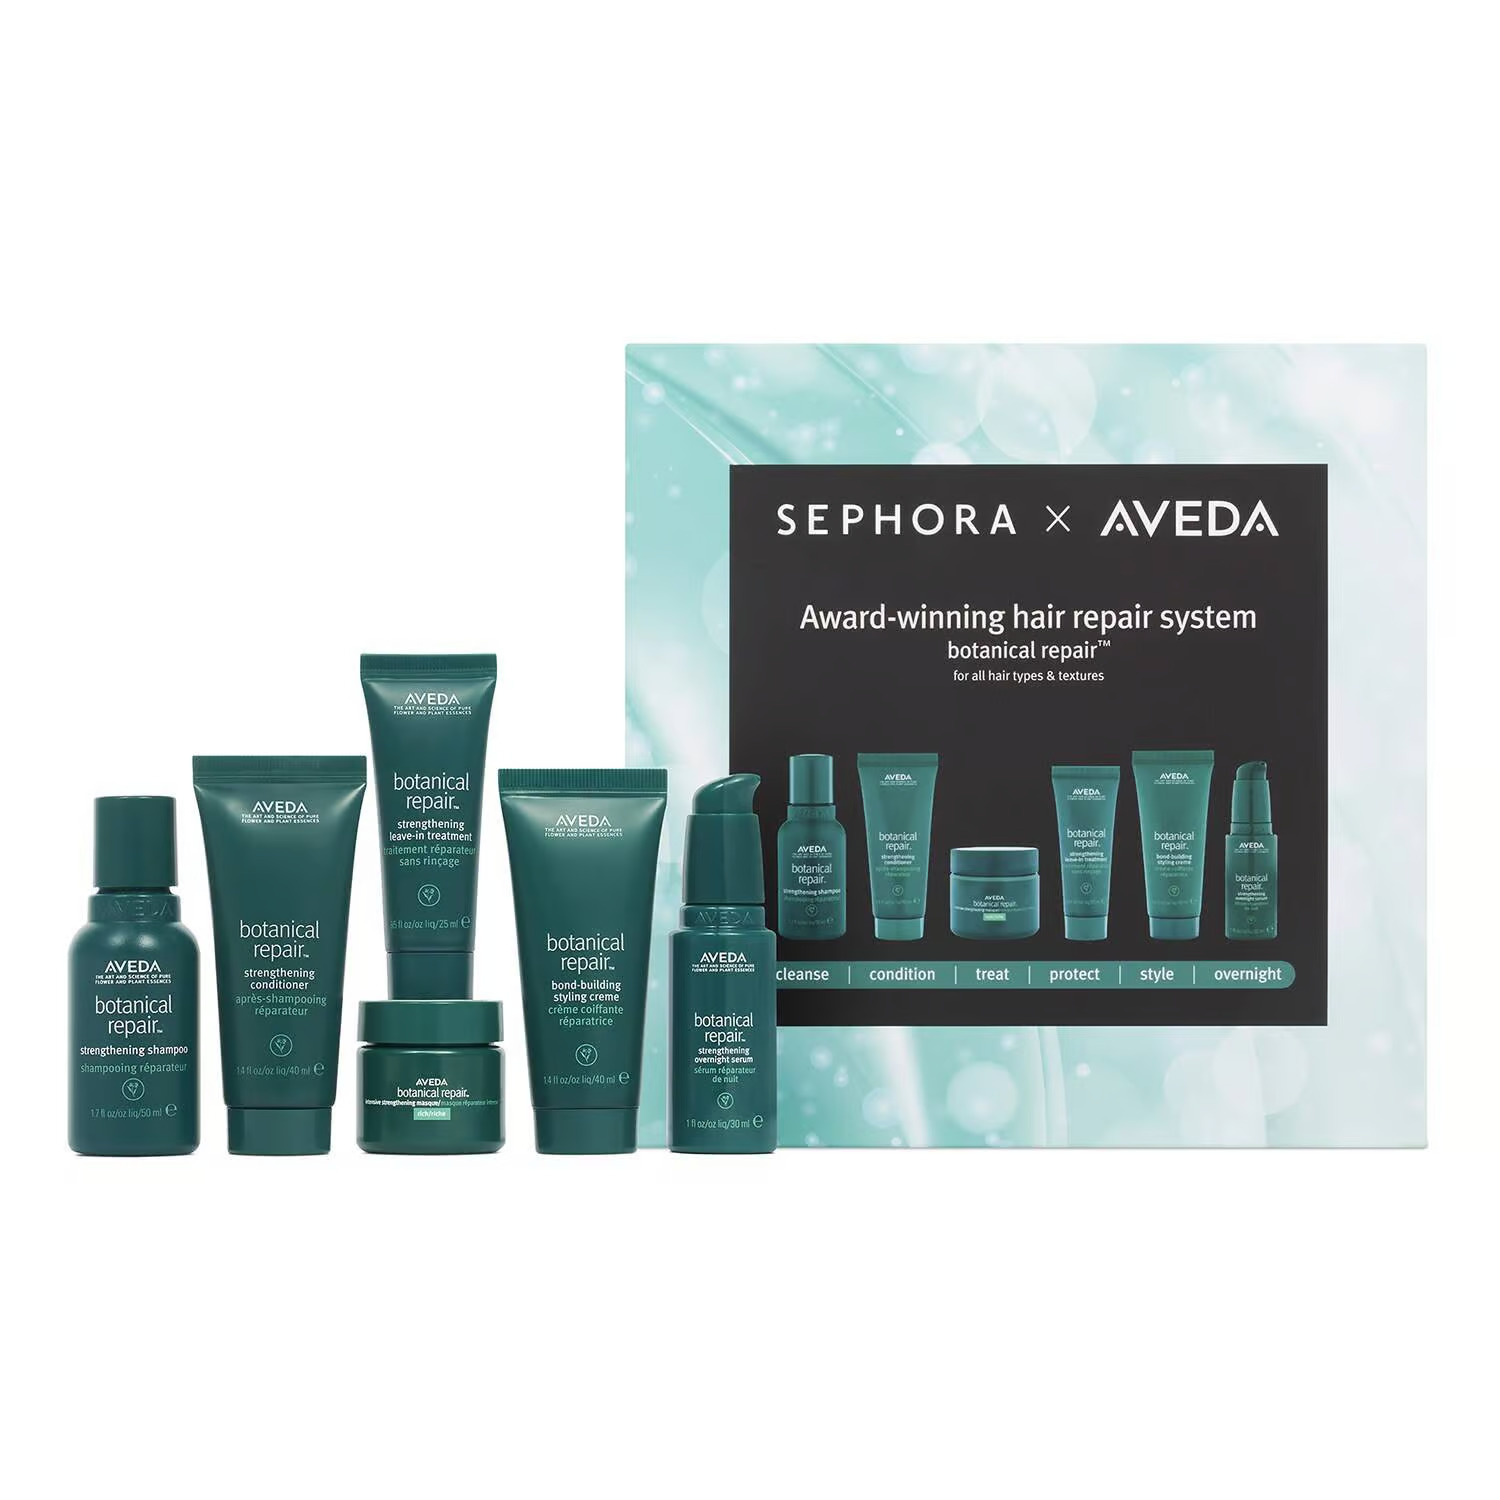 AVEDA x Sephora Award Winning Hair Repair System  Discounts and Cashback